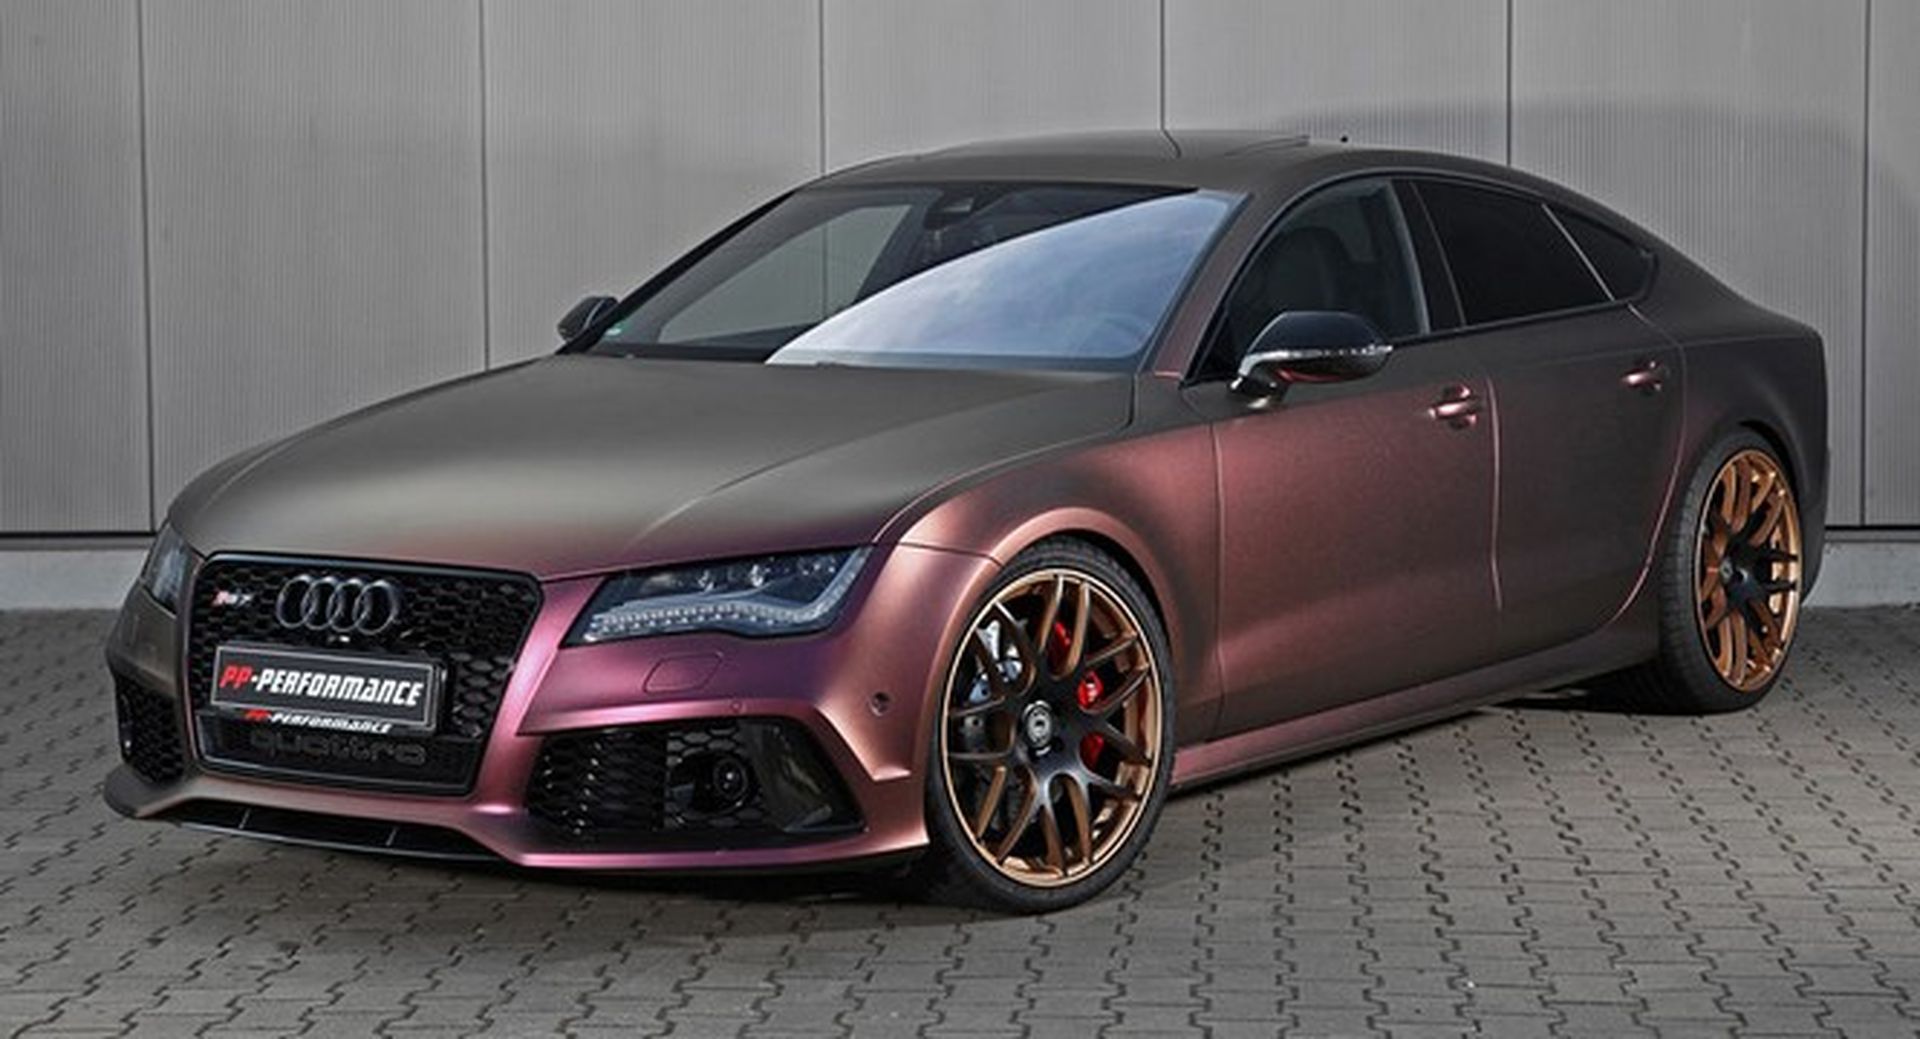 Audi RS7 PP-Performance